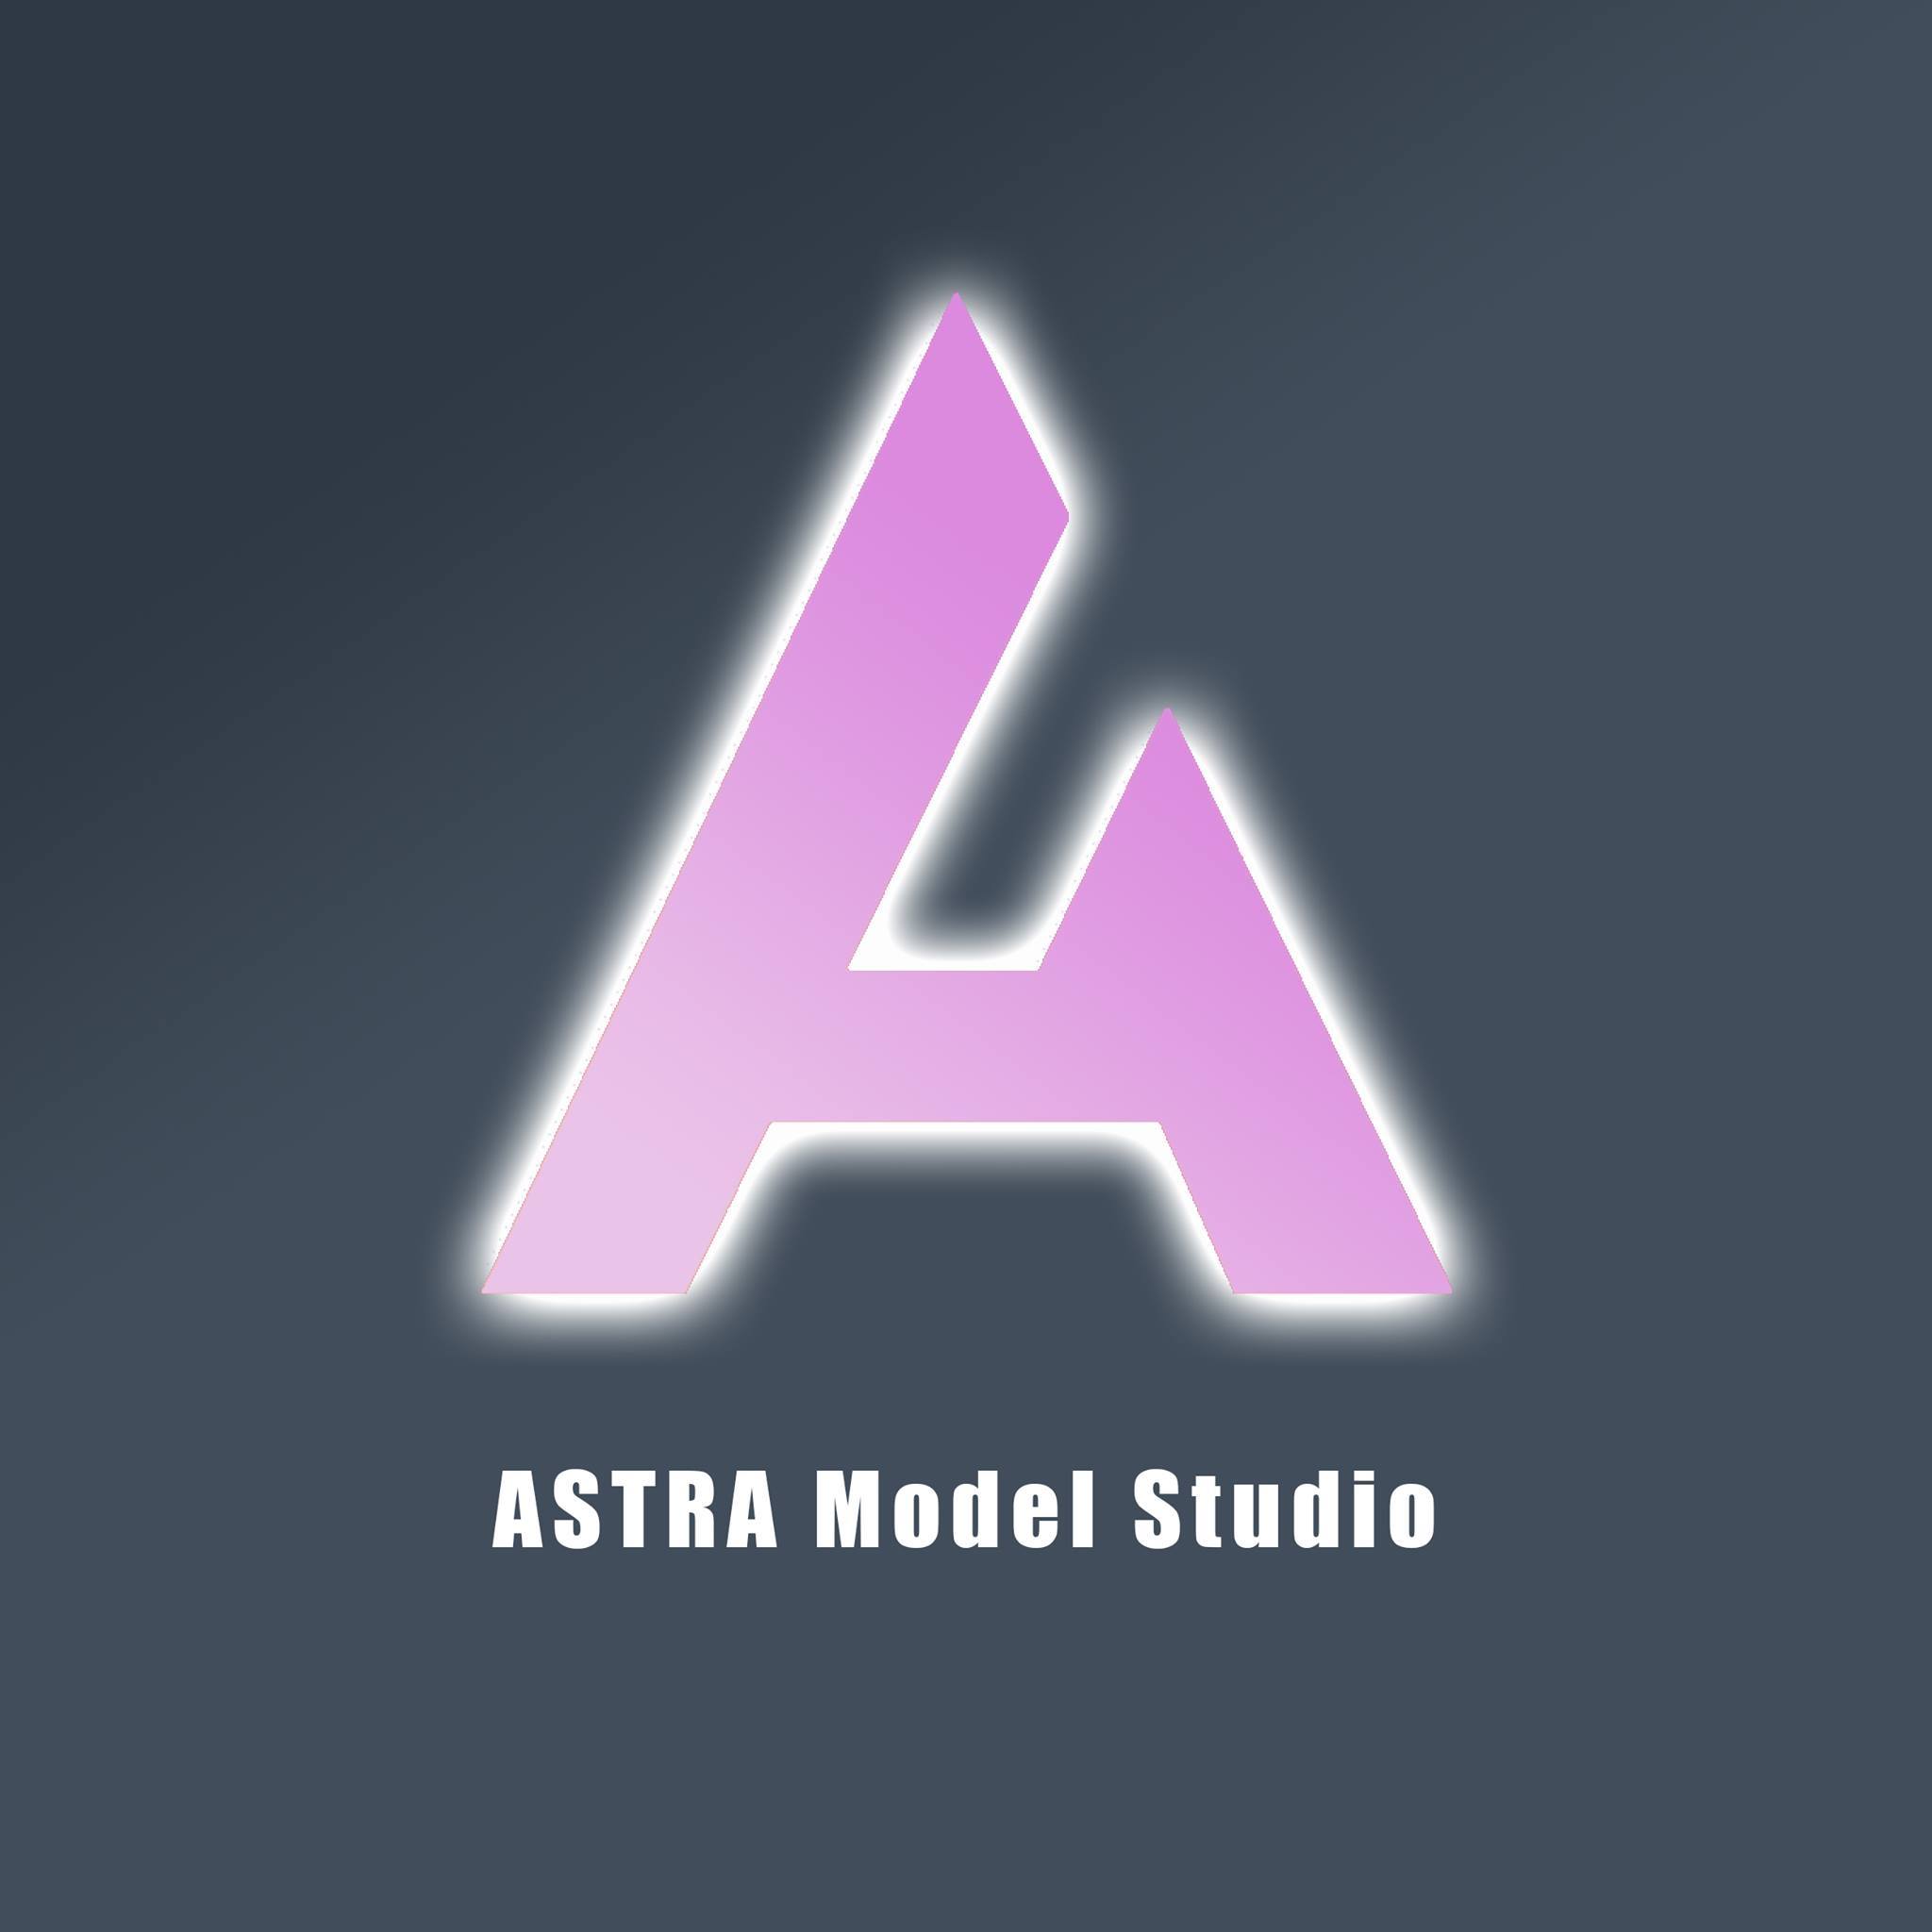 Astra Model Studio